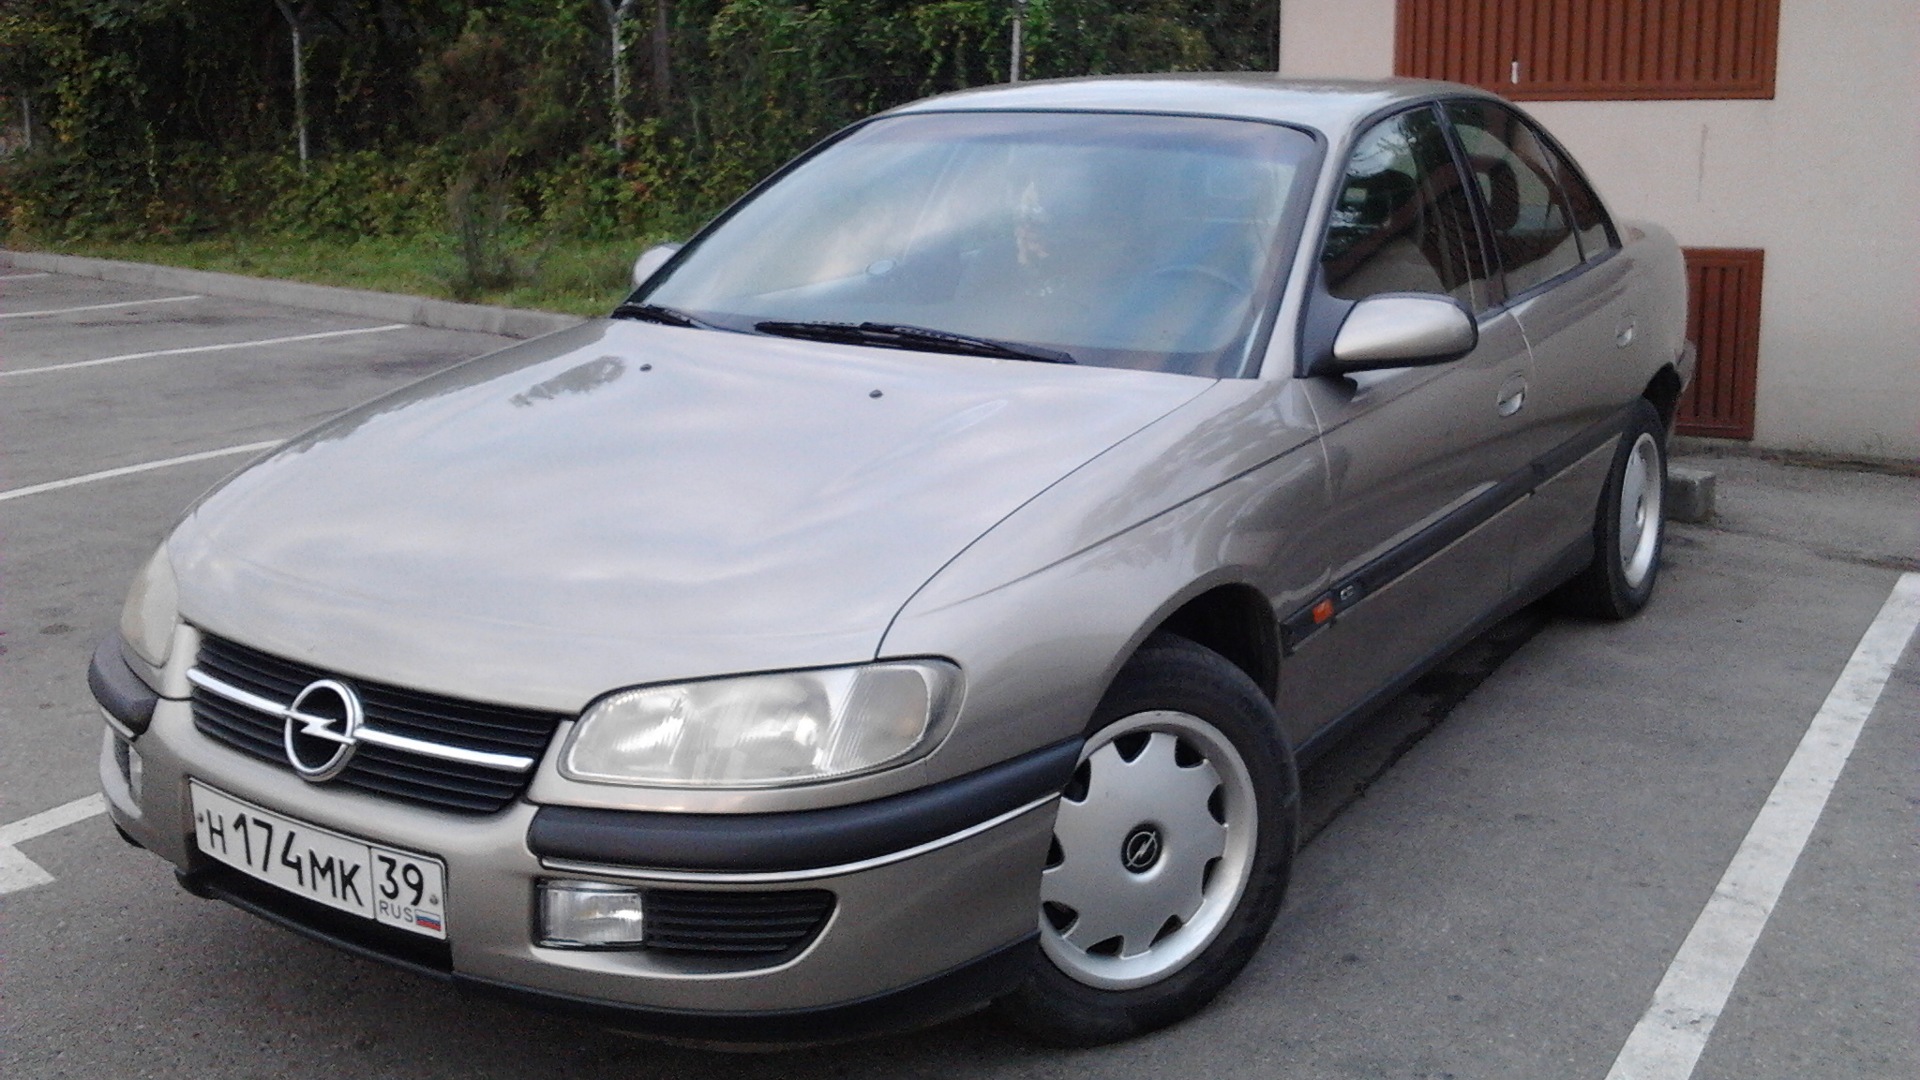 Opel Omega 1996